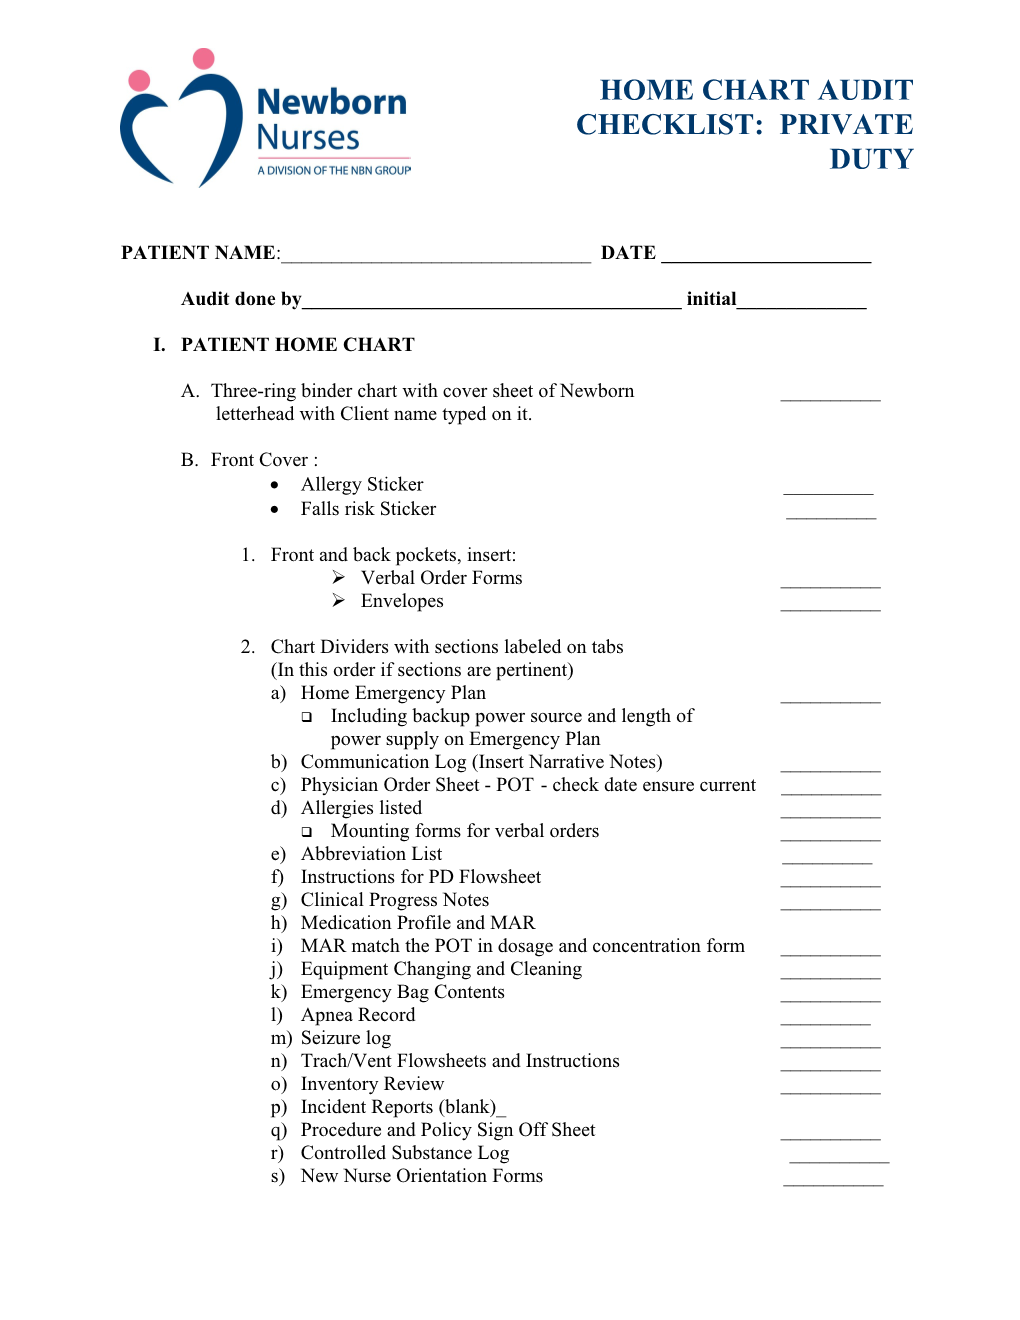 Supervisory Admission Chart Checklist: Private Duty